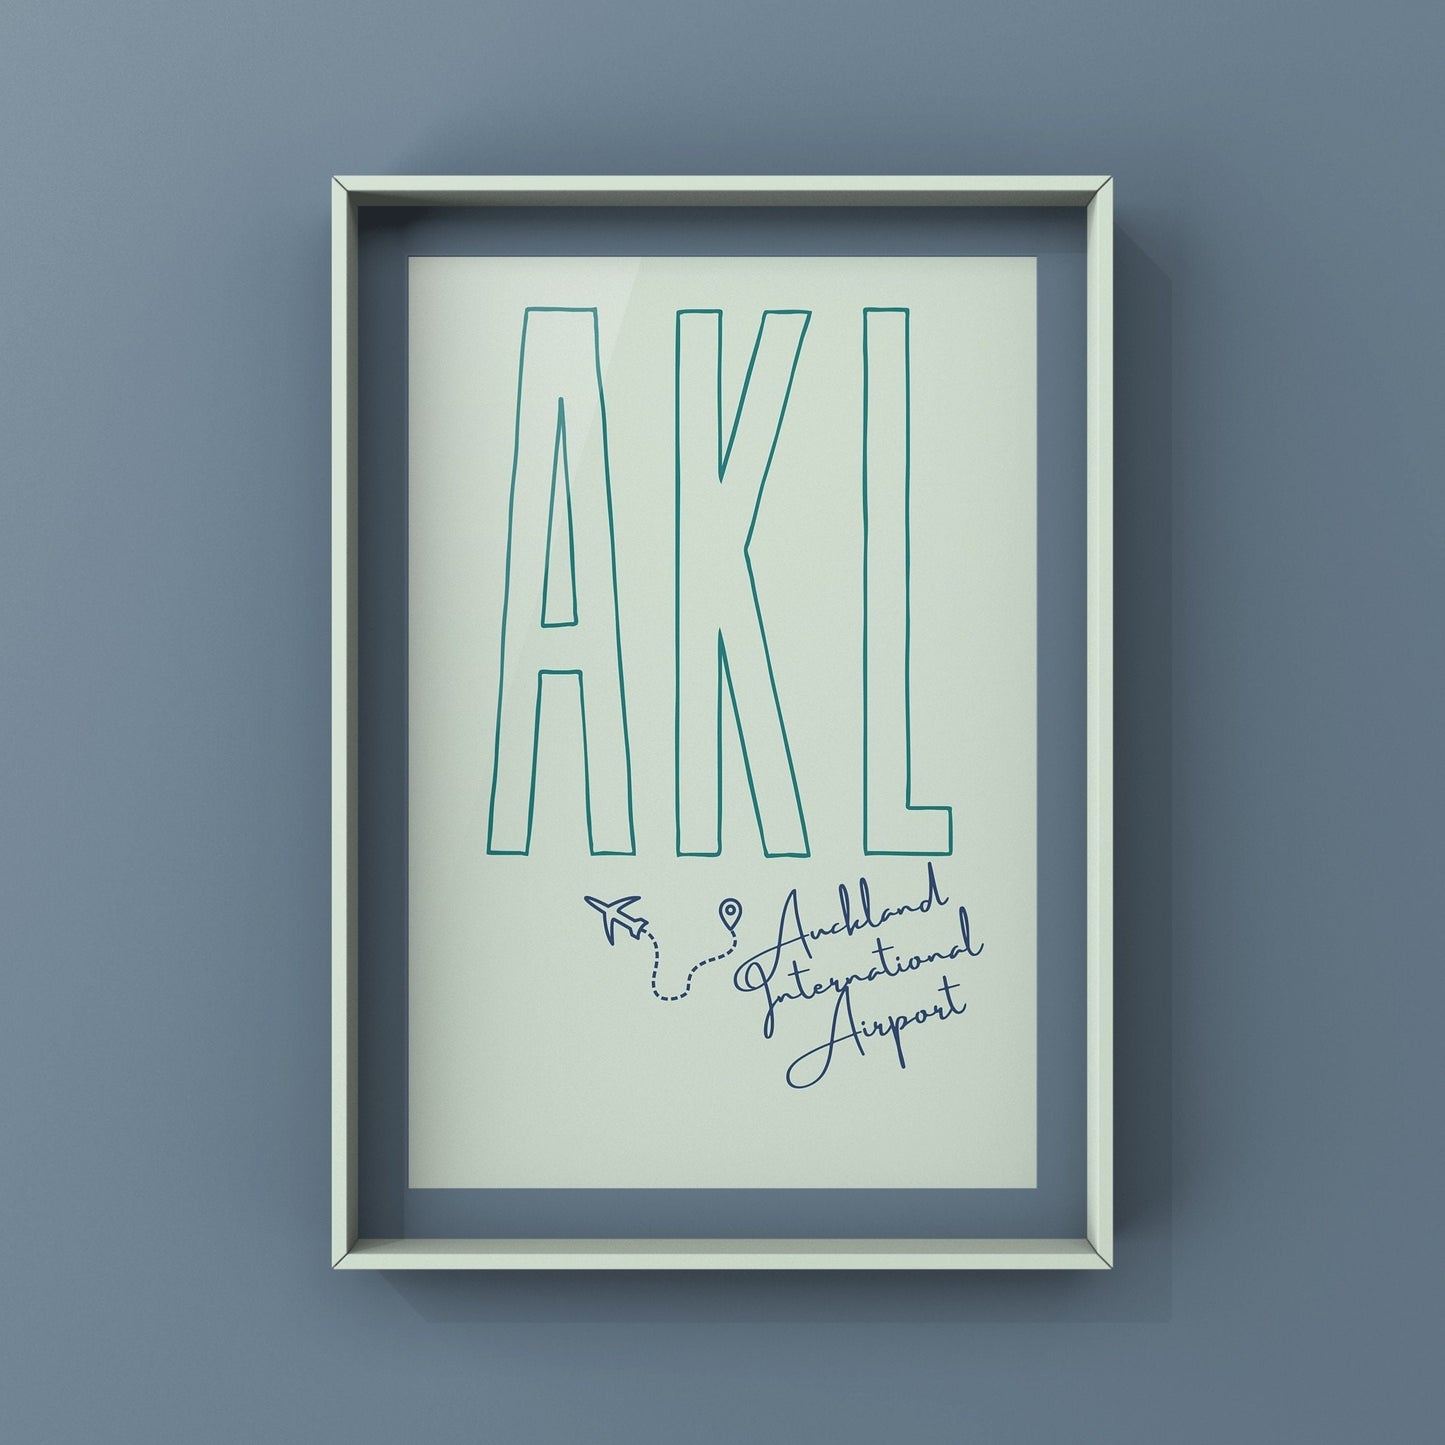 AKL | Auckland Airport Code Print | Travel Poster